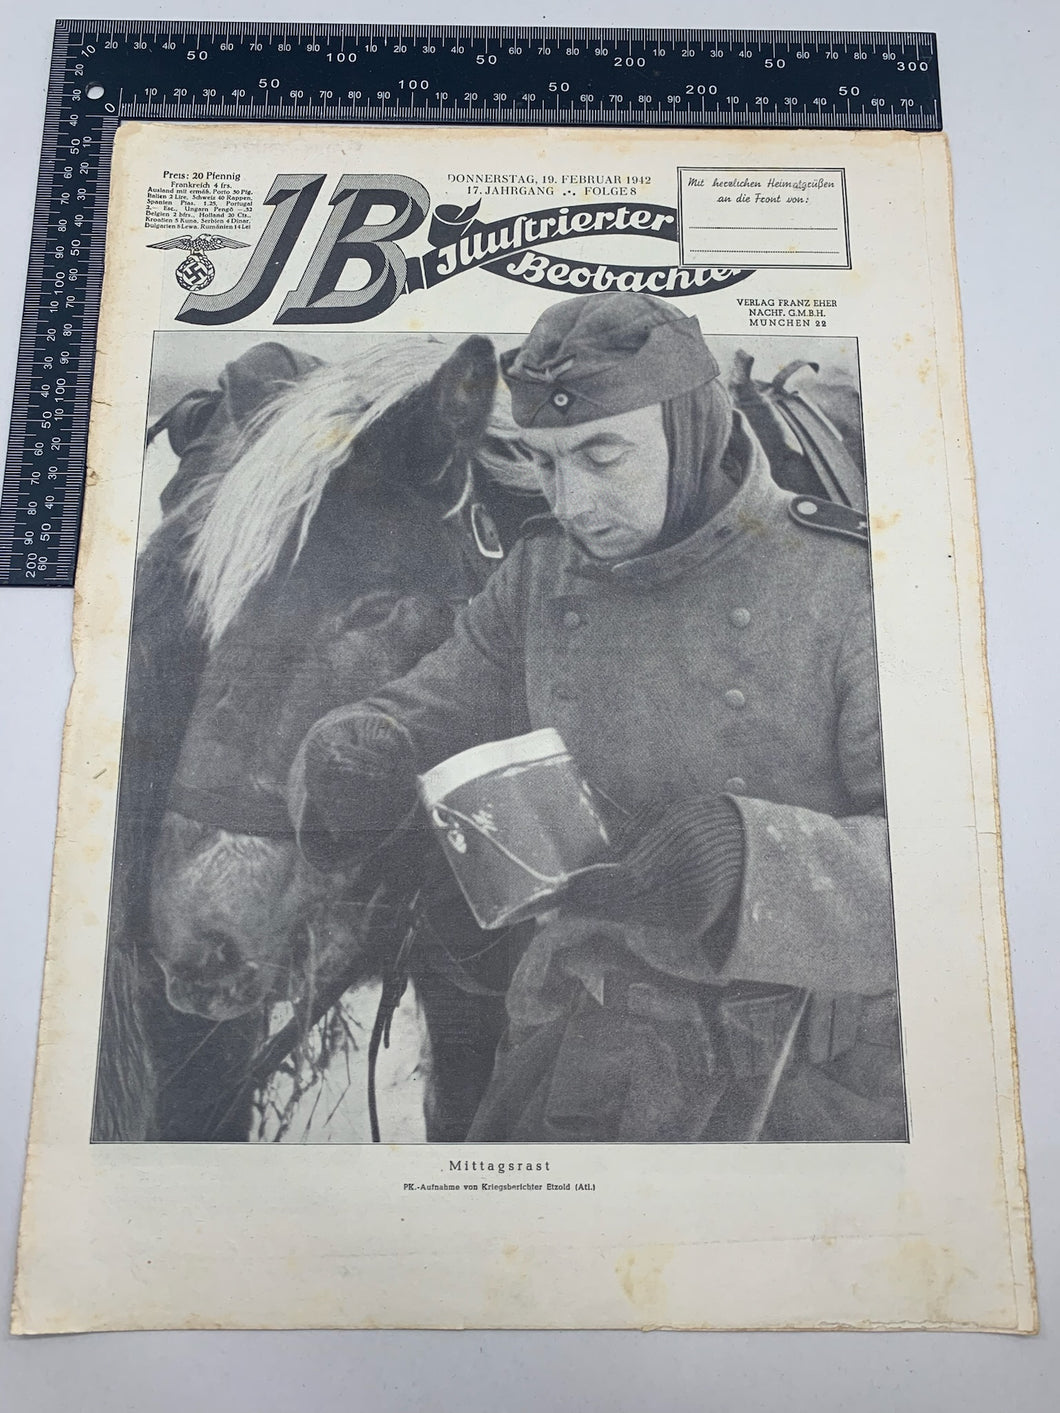 JB Juustrierter Beobachter NSDAP Magazine Original WW2 German - 19th February 1942